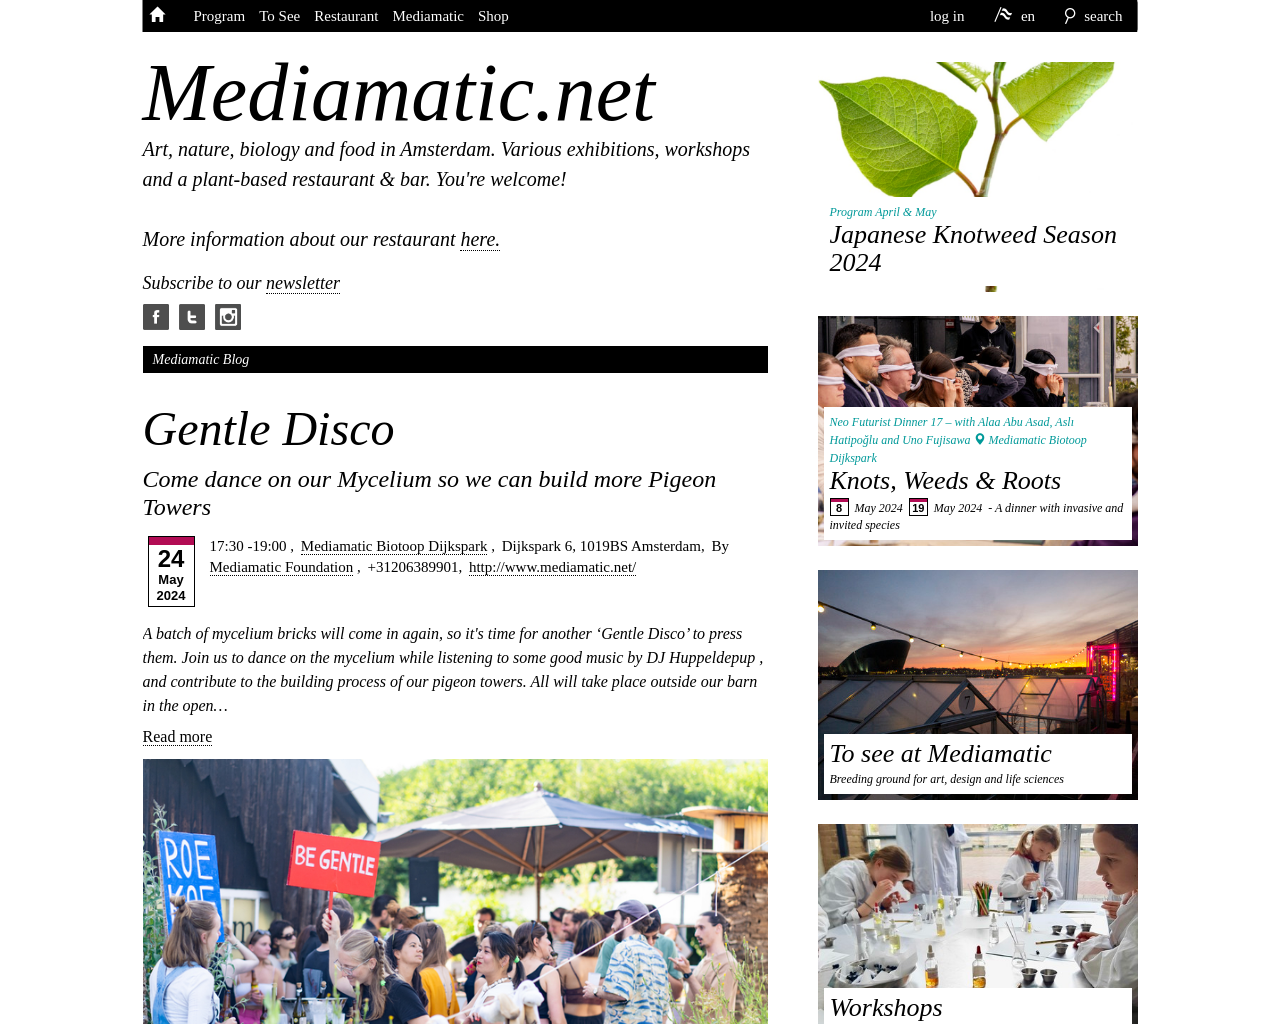 mediamatic.net